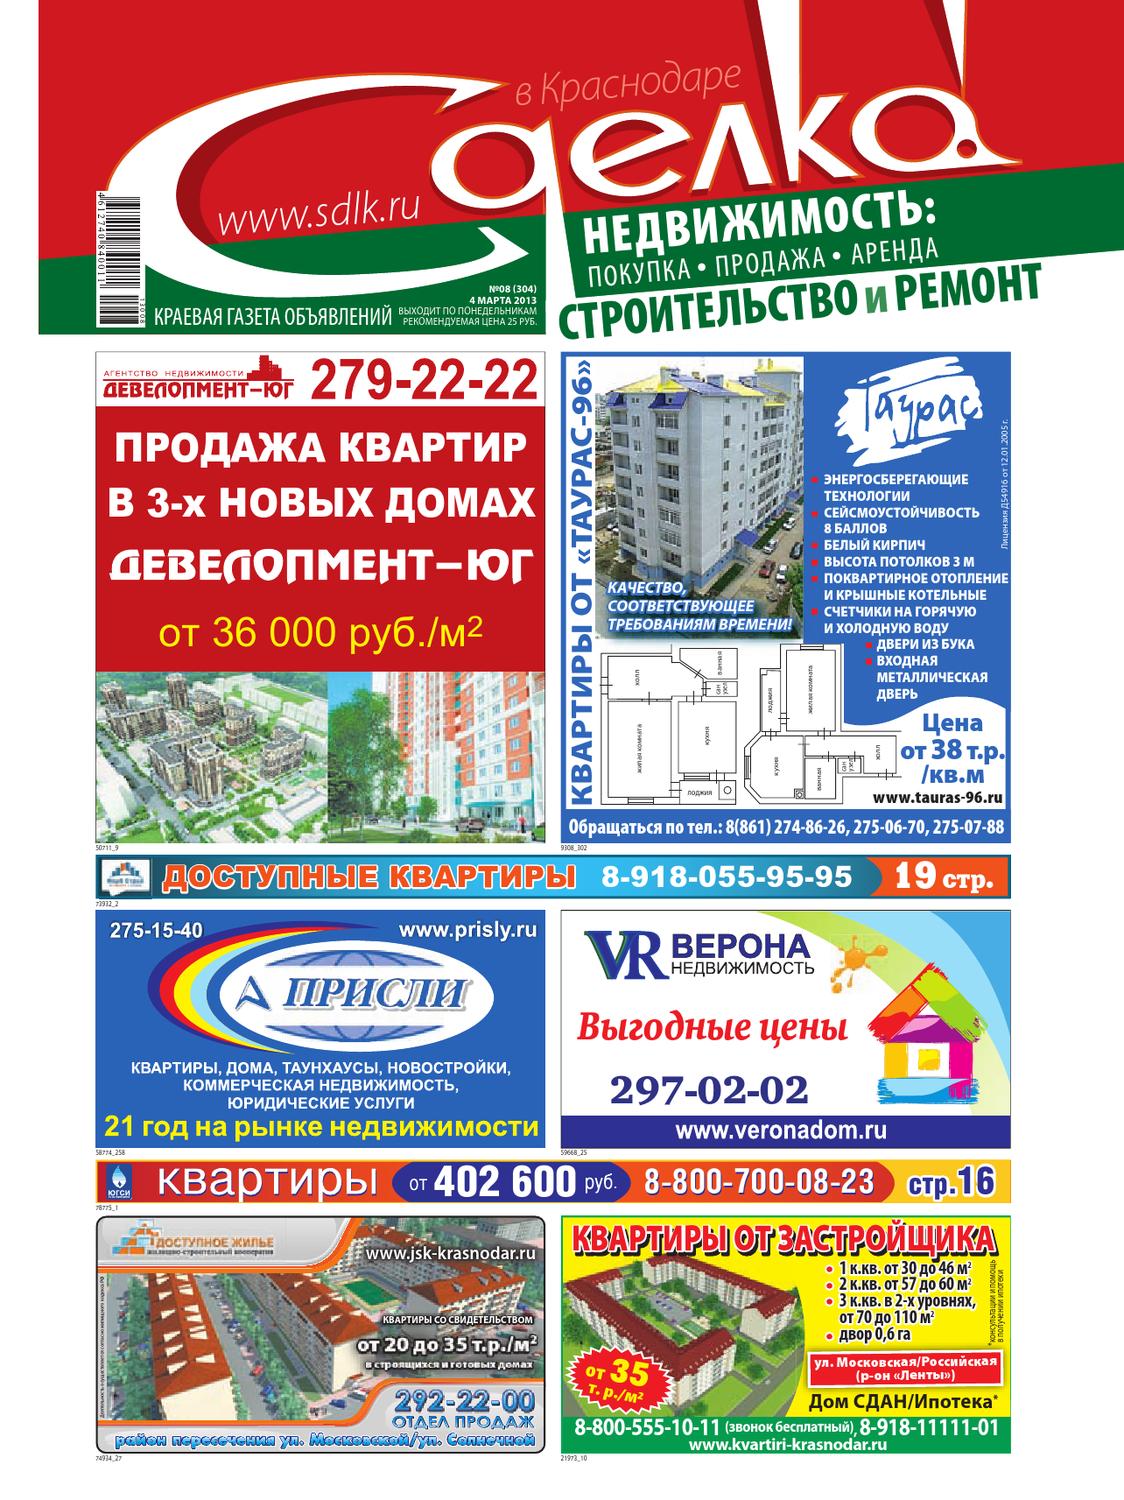 Сделка в Краснодаре № 304, март 2013